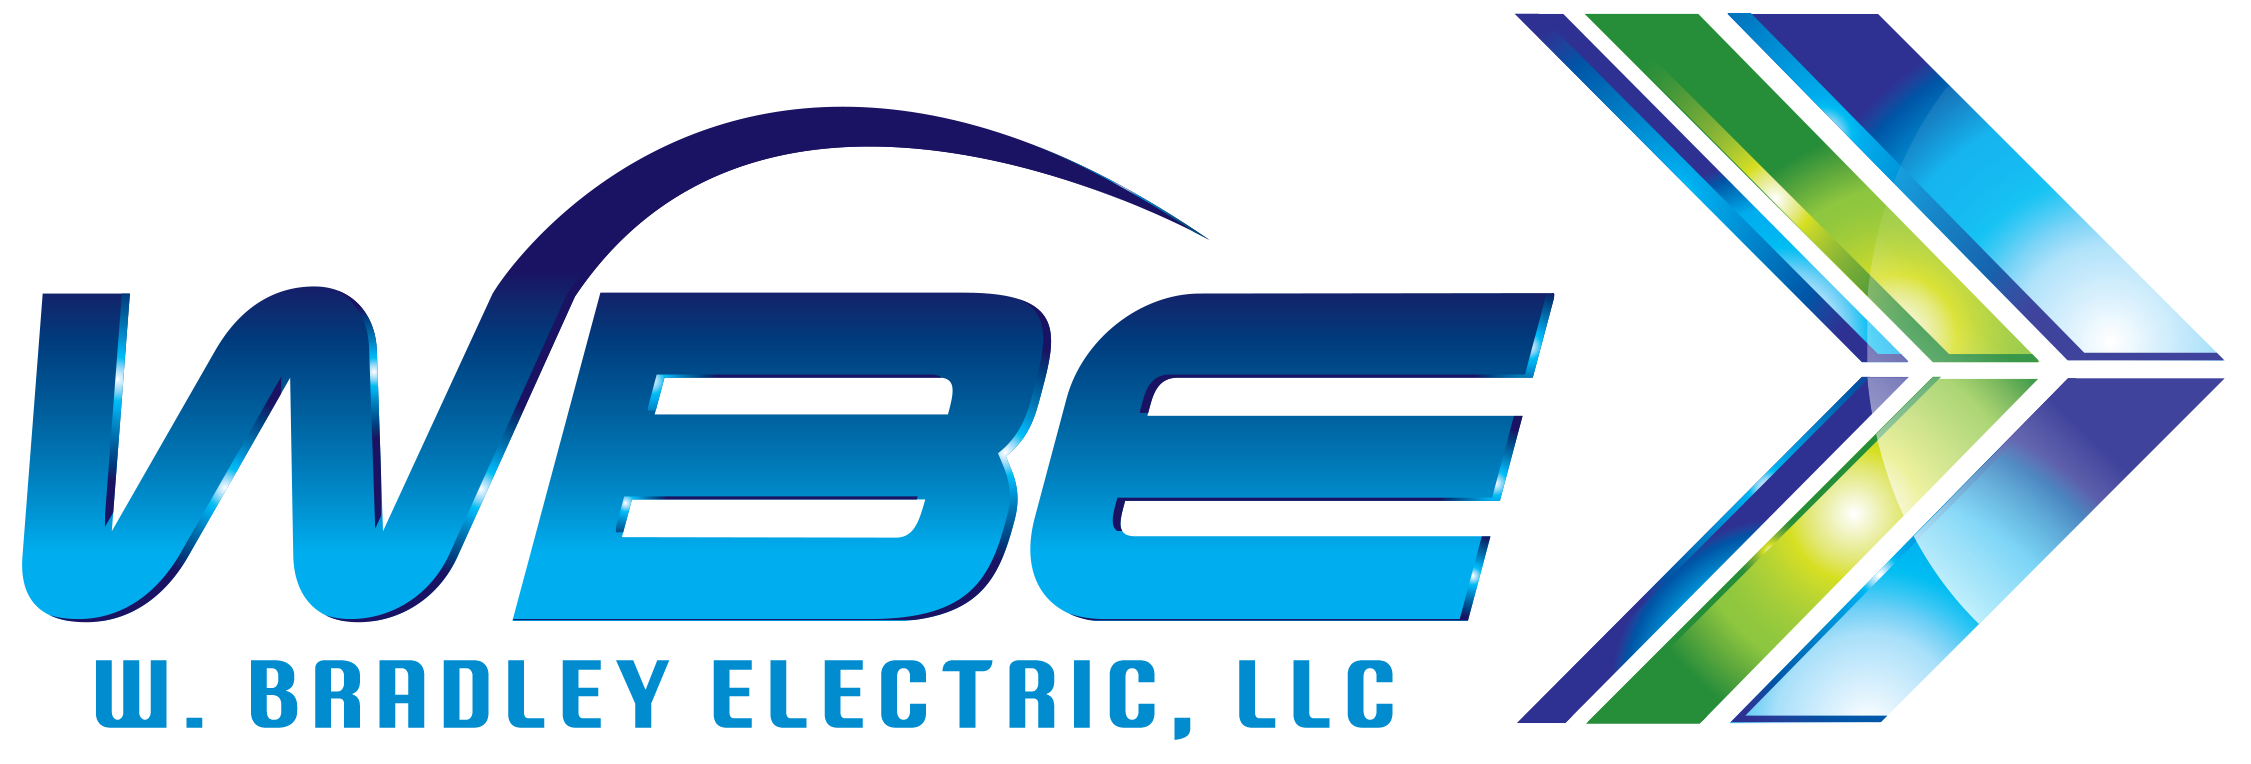 W. Bradley Electric, LLC